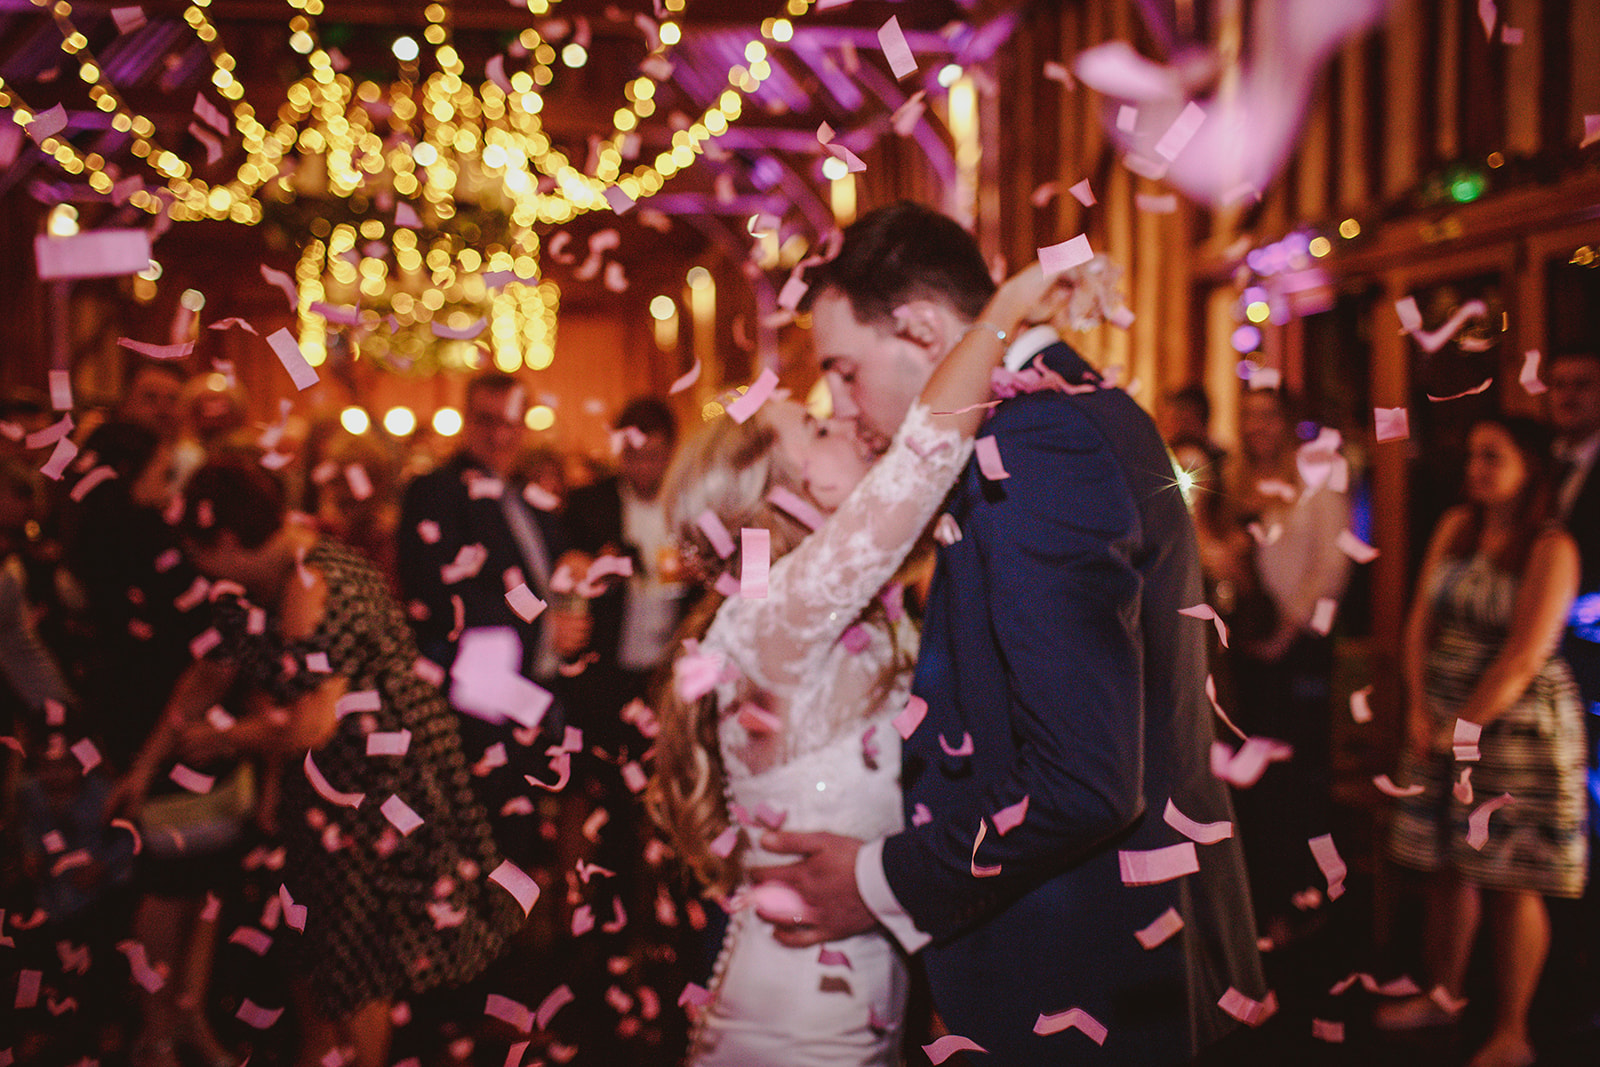 Wedding DJ at Lillibrooke Manor luxury Berkshire barn wedding venue - wedding couples first dance with confetti